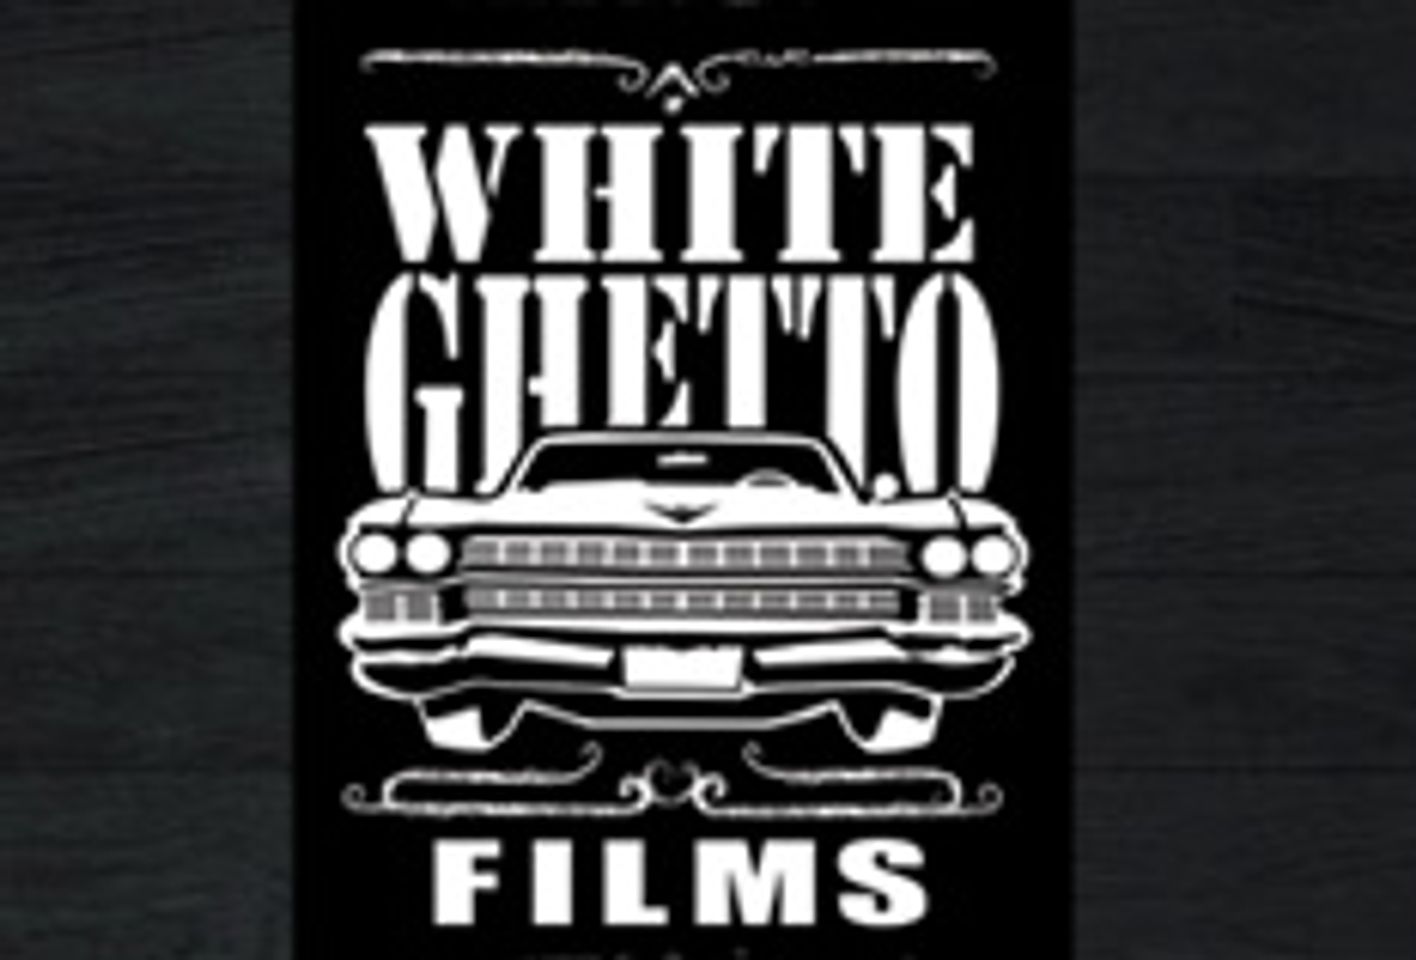 White Ghetto Films Debuts New Combo Pack Cover Design